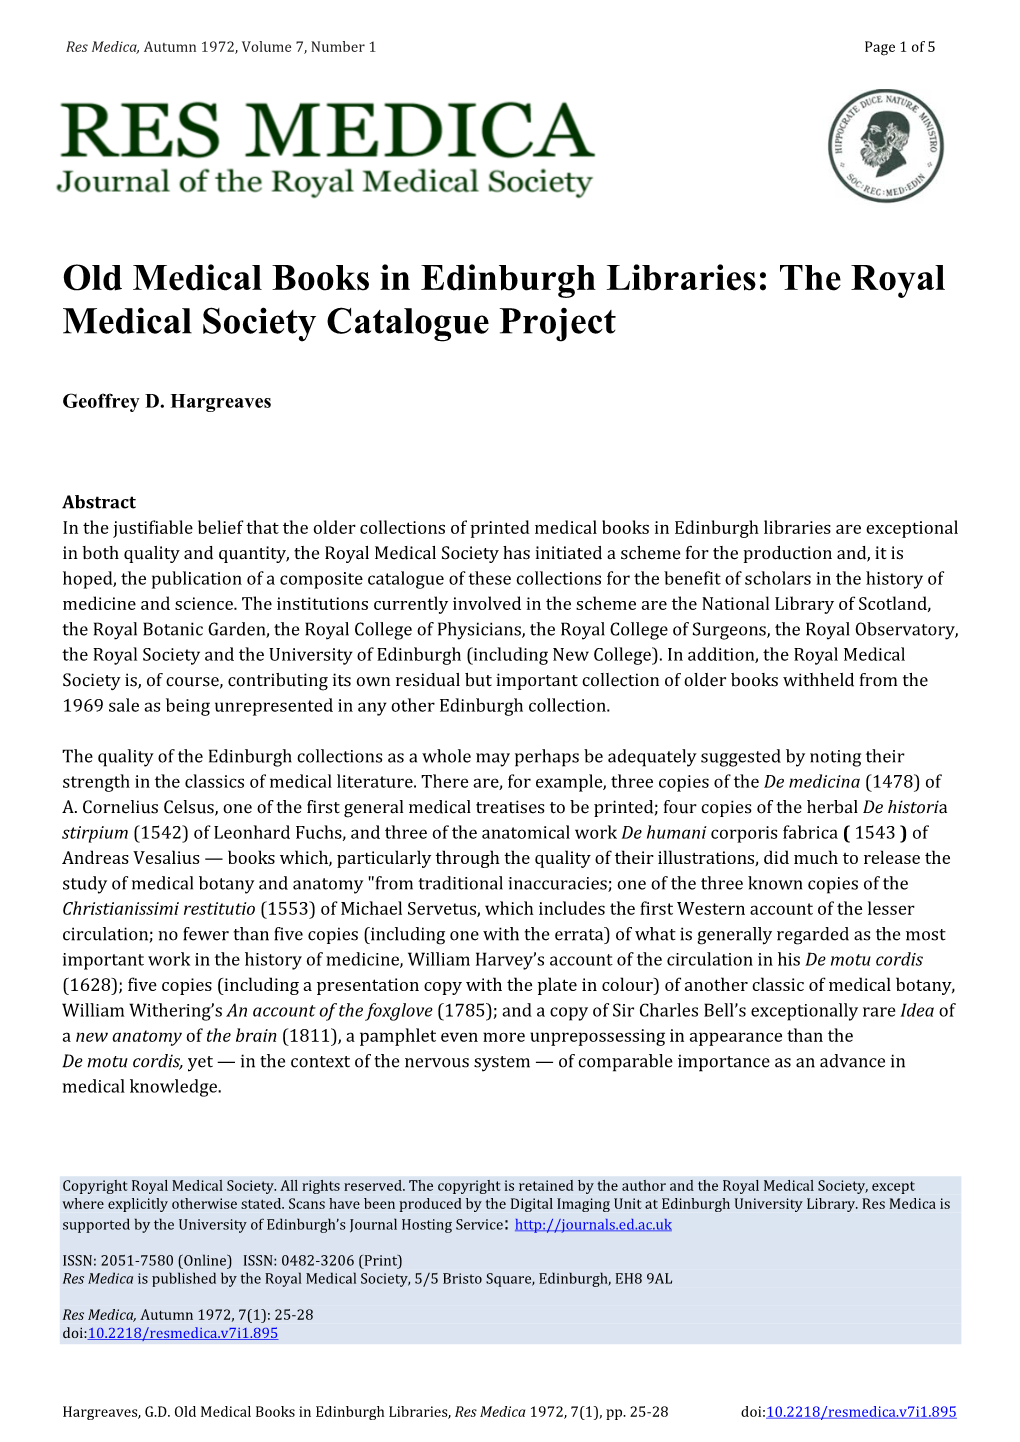 The Royal Medical Society Catalogue Project